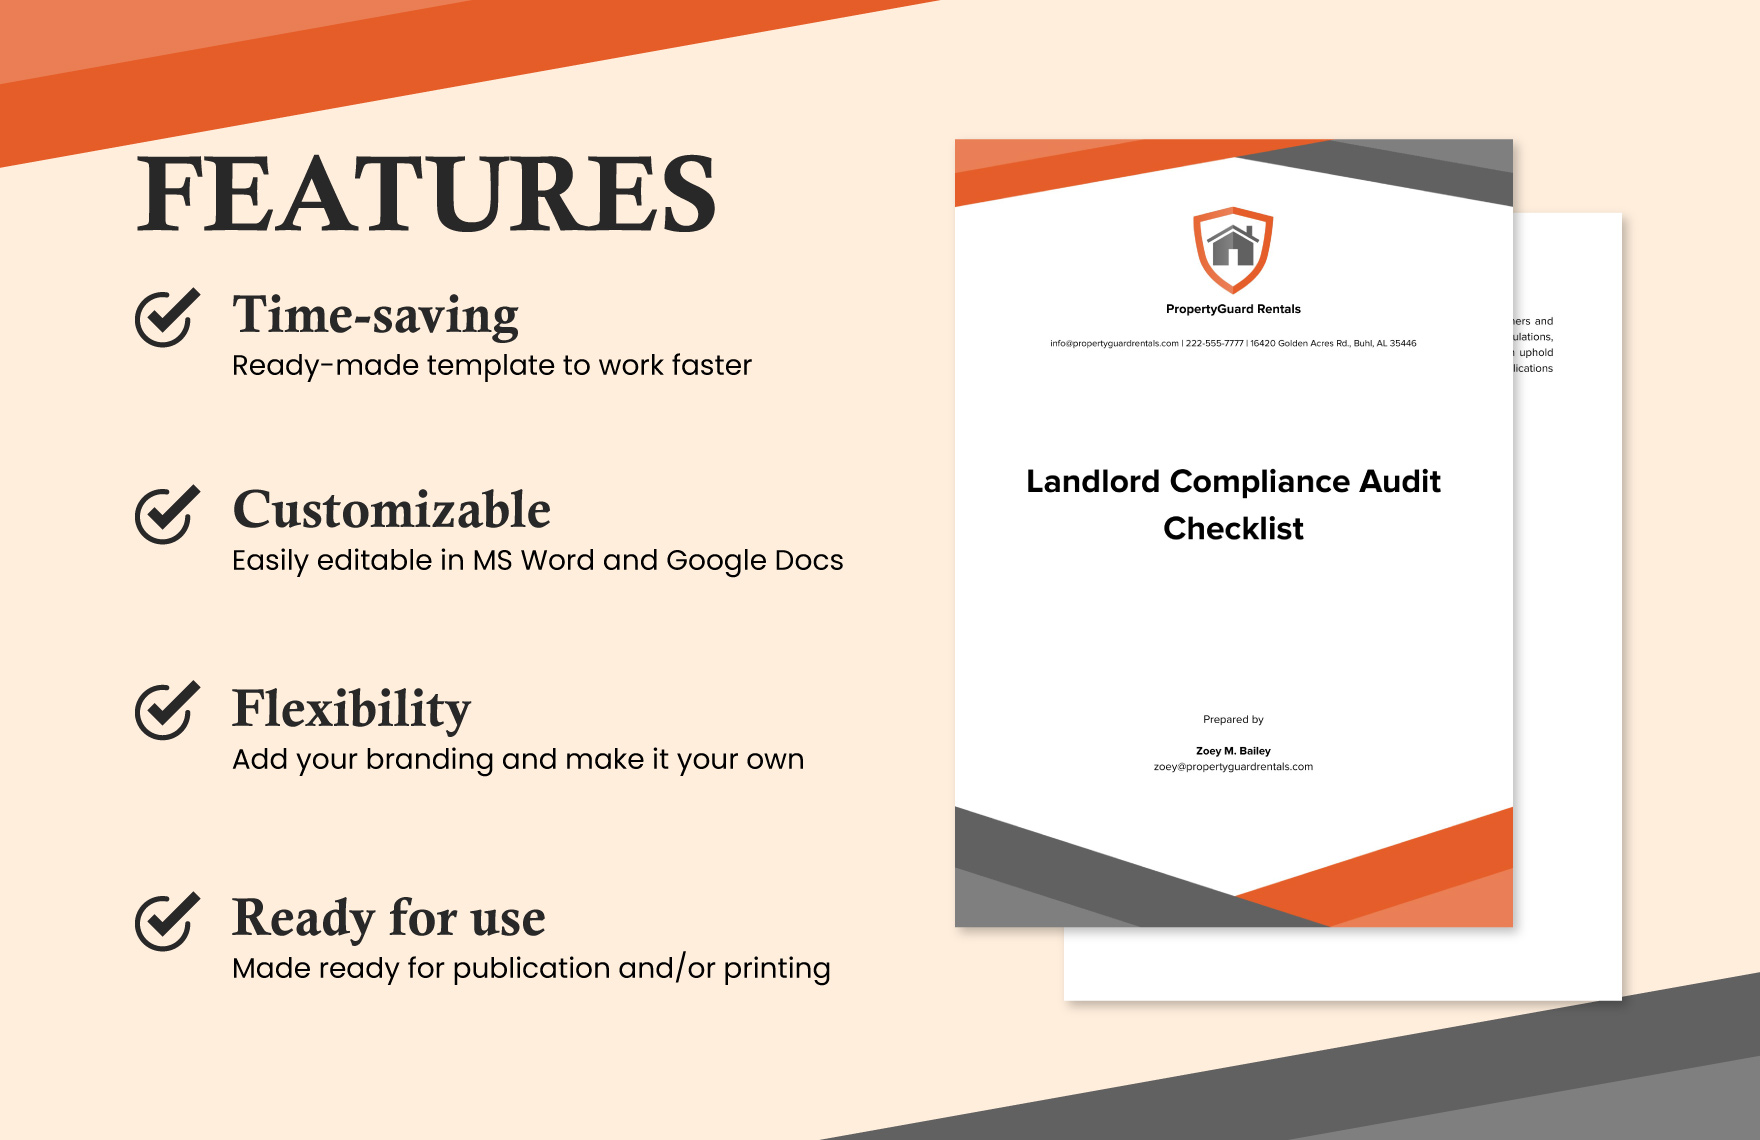 Landlord Compliance Audit Checklist Template